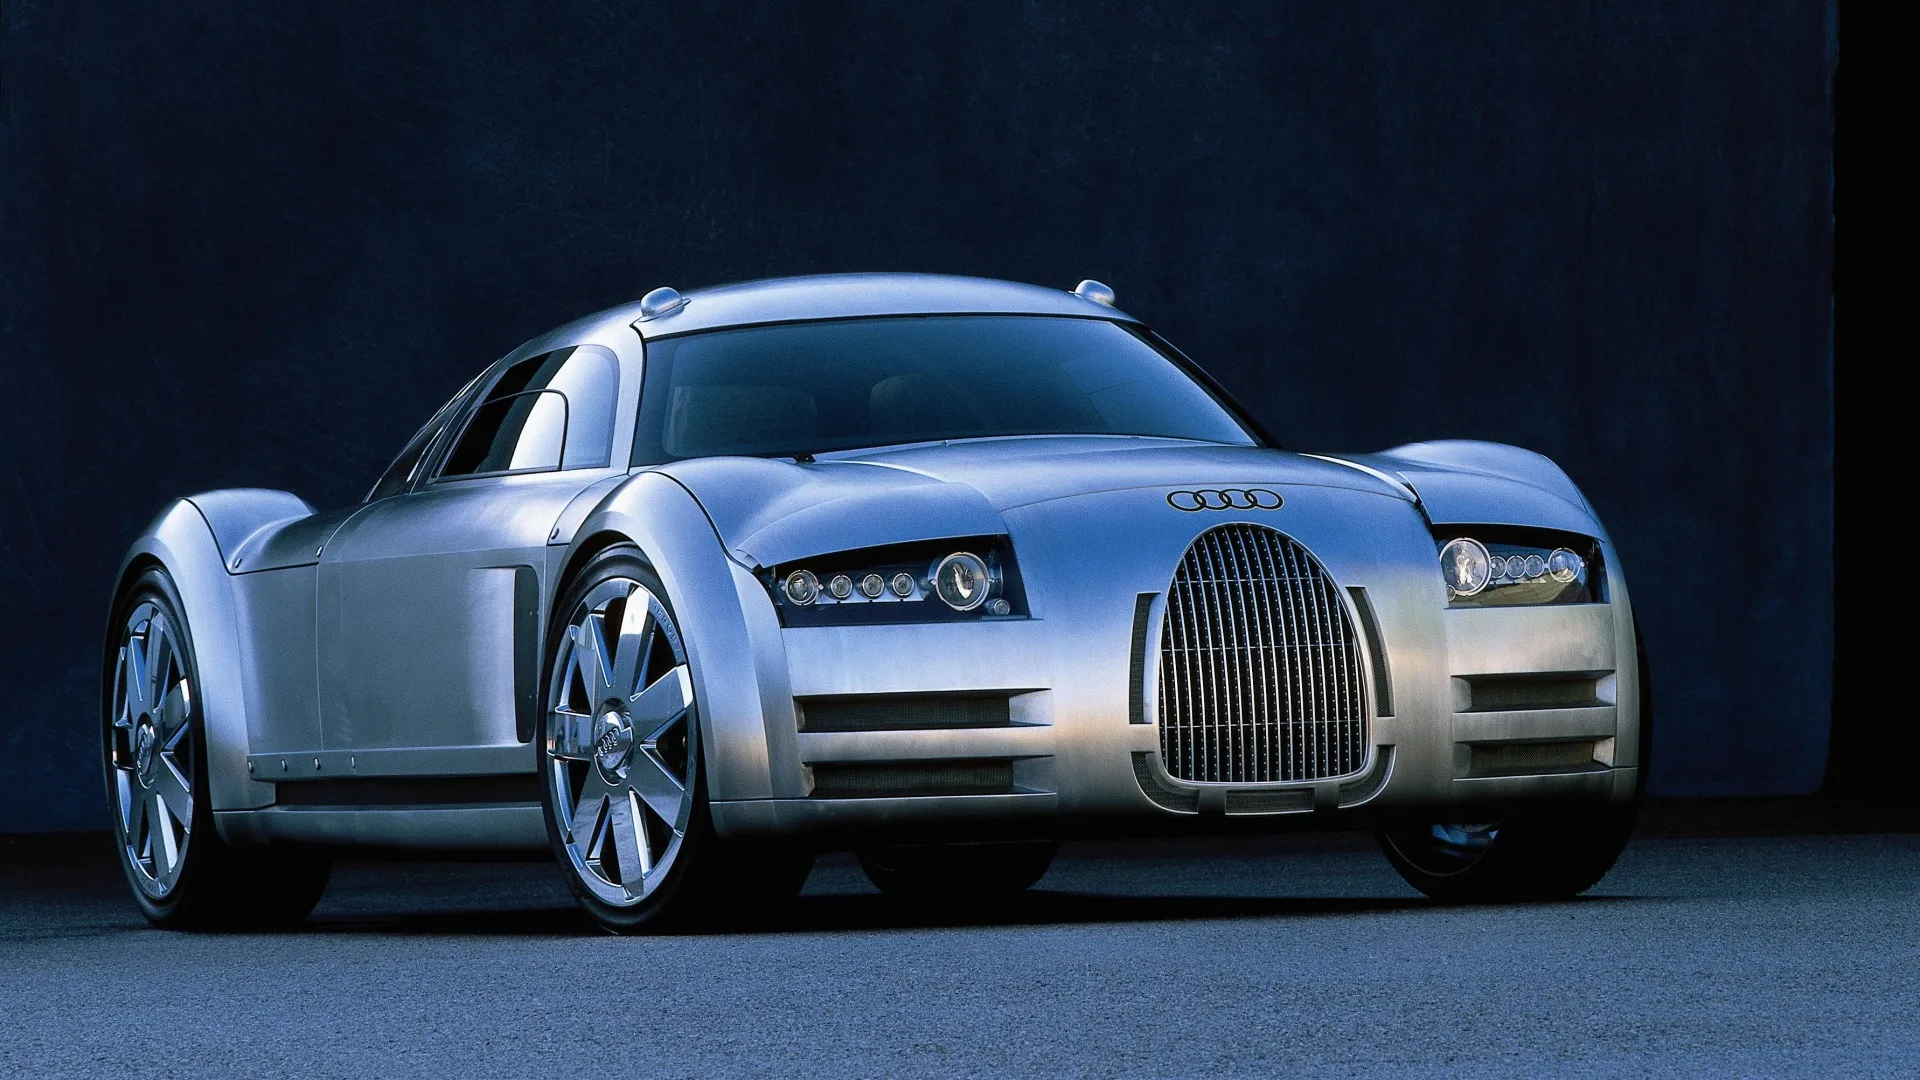 Coche del día: Audi Rosemeyer Concept